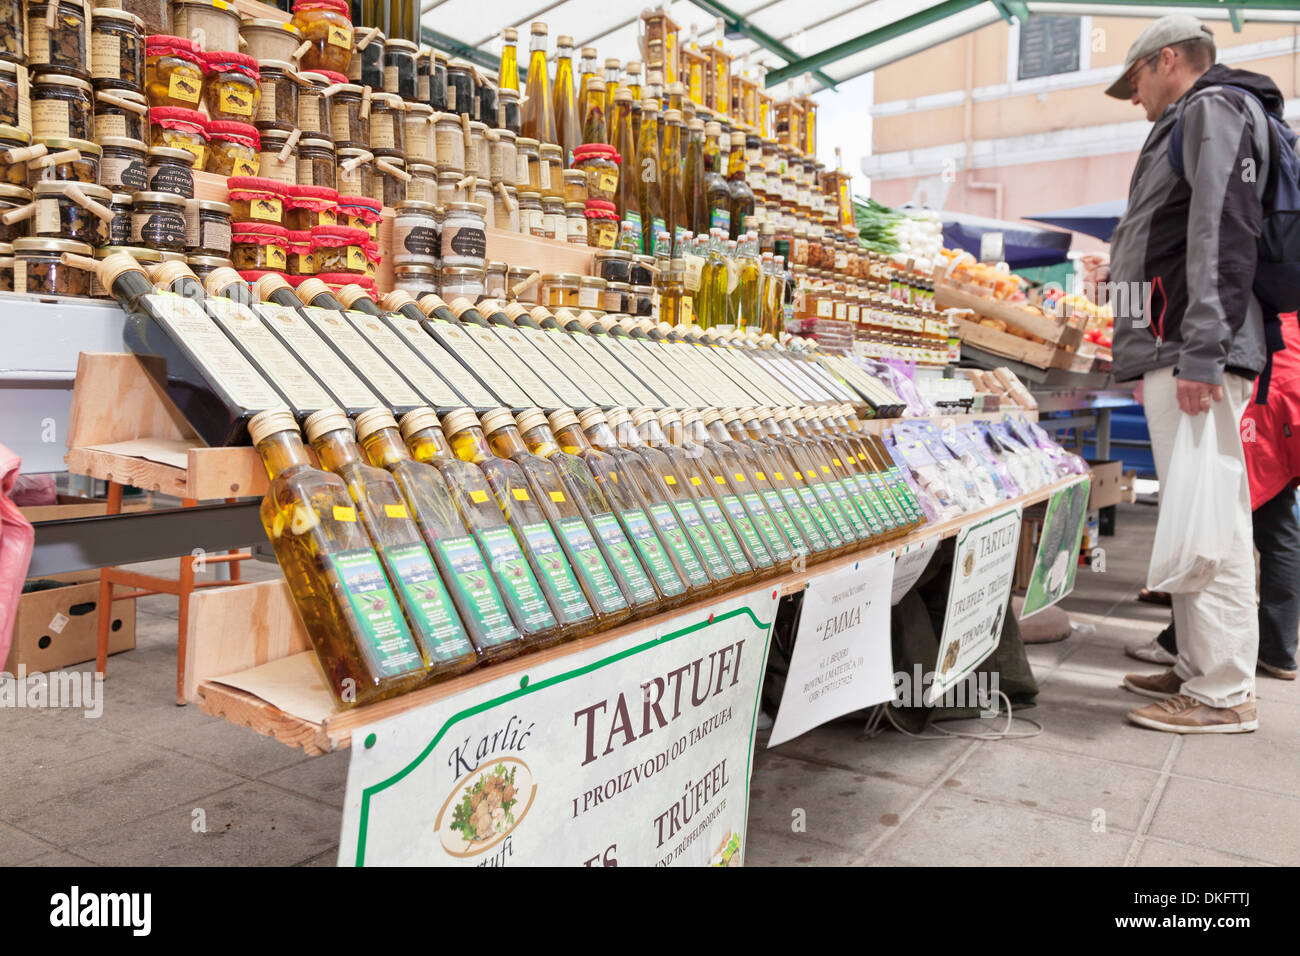 Truffles and bottles of olive oil selling on the market, Rovinj, Istria, Croatia, Europe Stock Photo